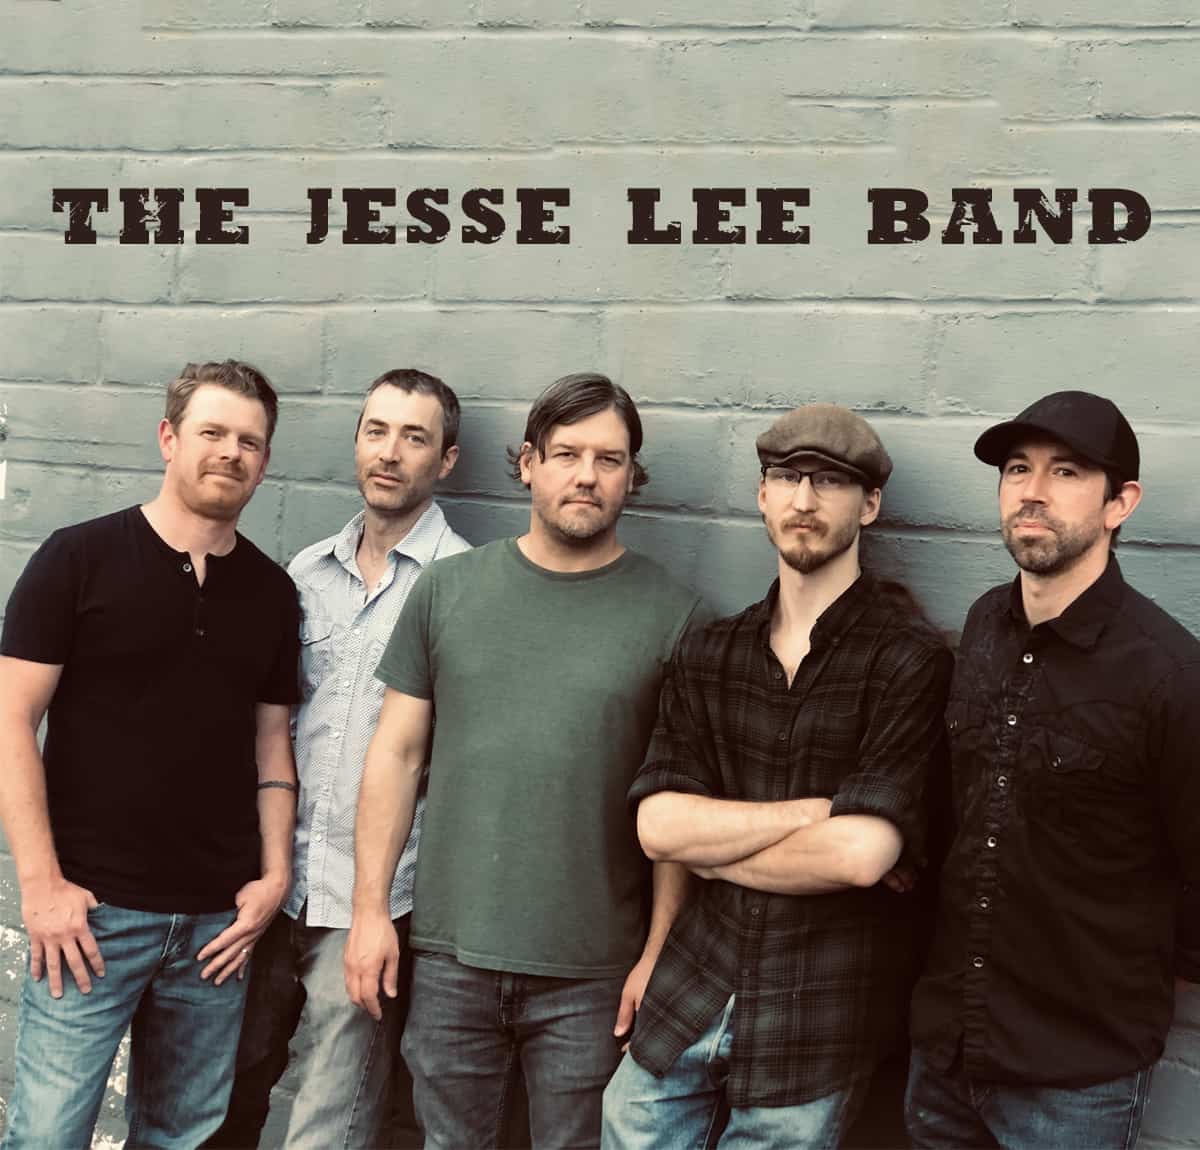 The Jesse Lee Band